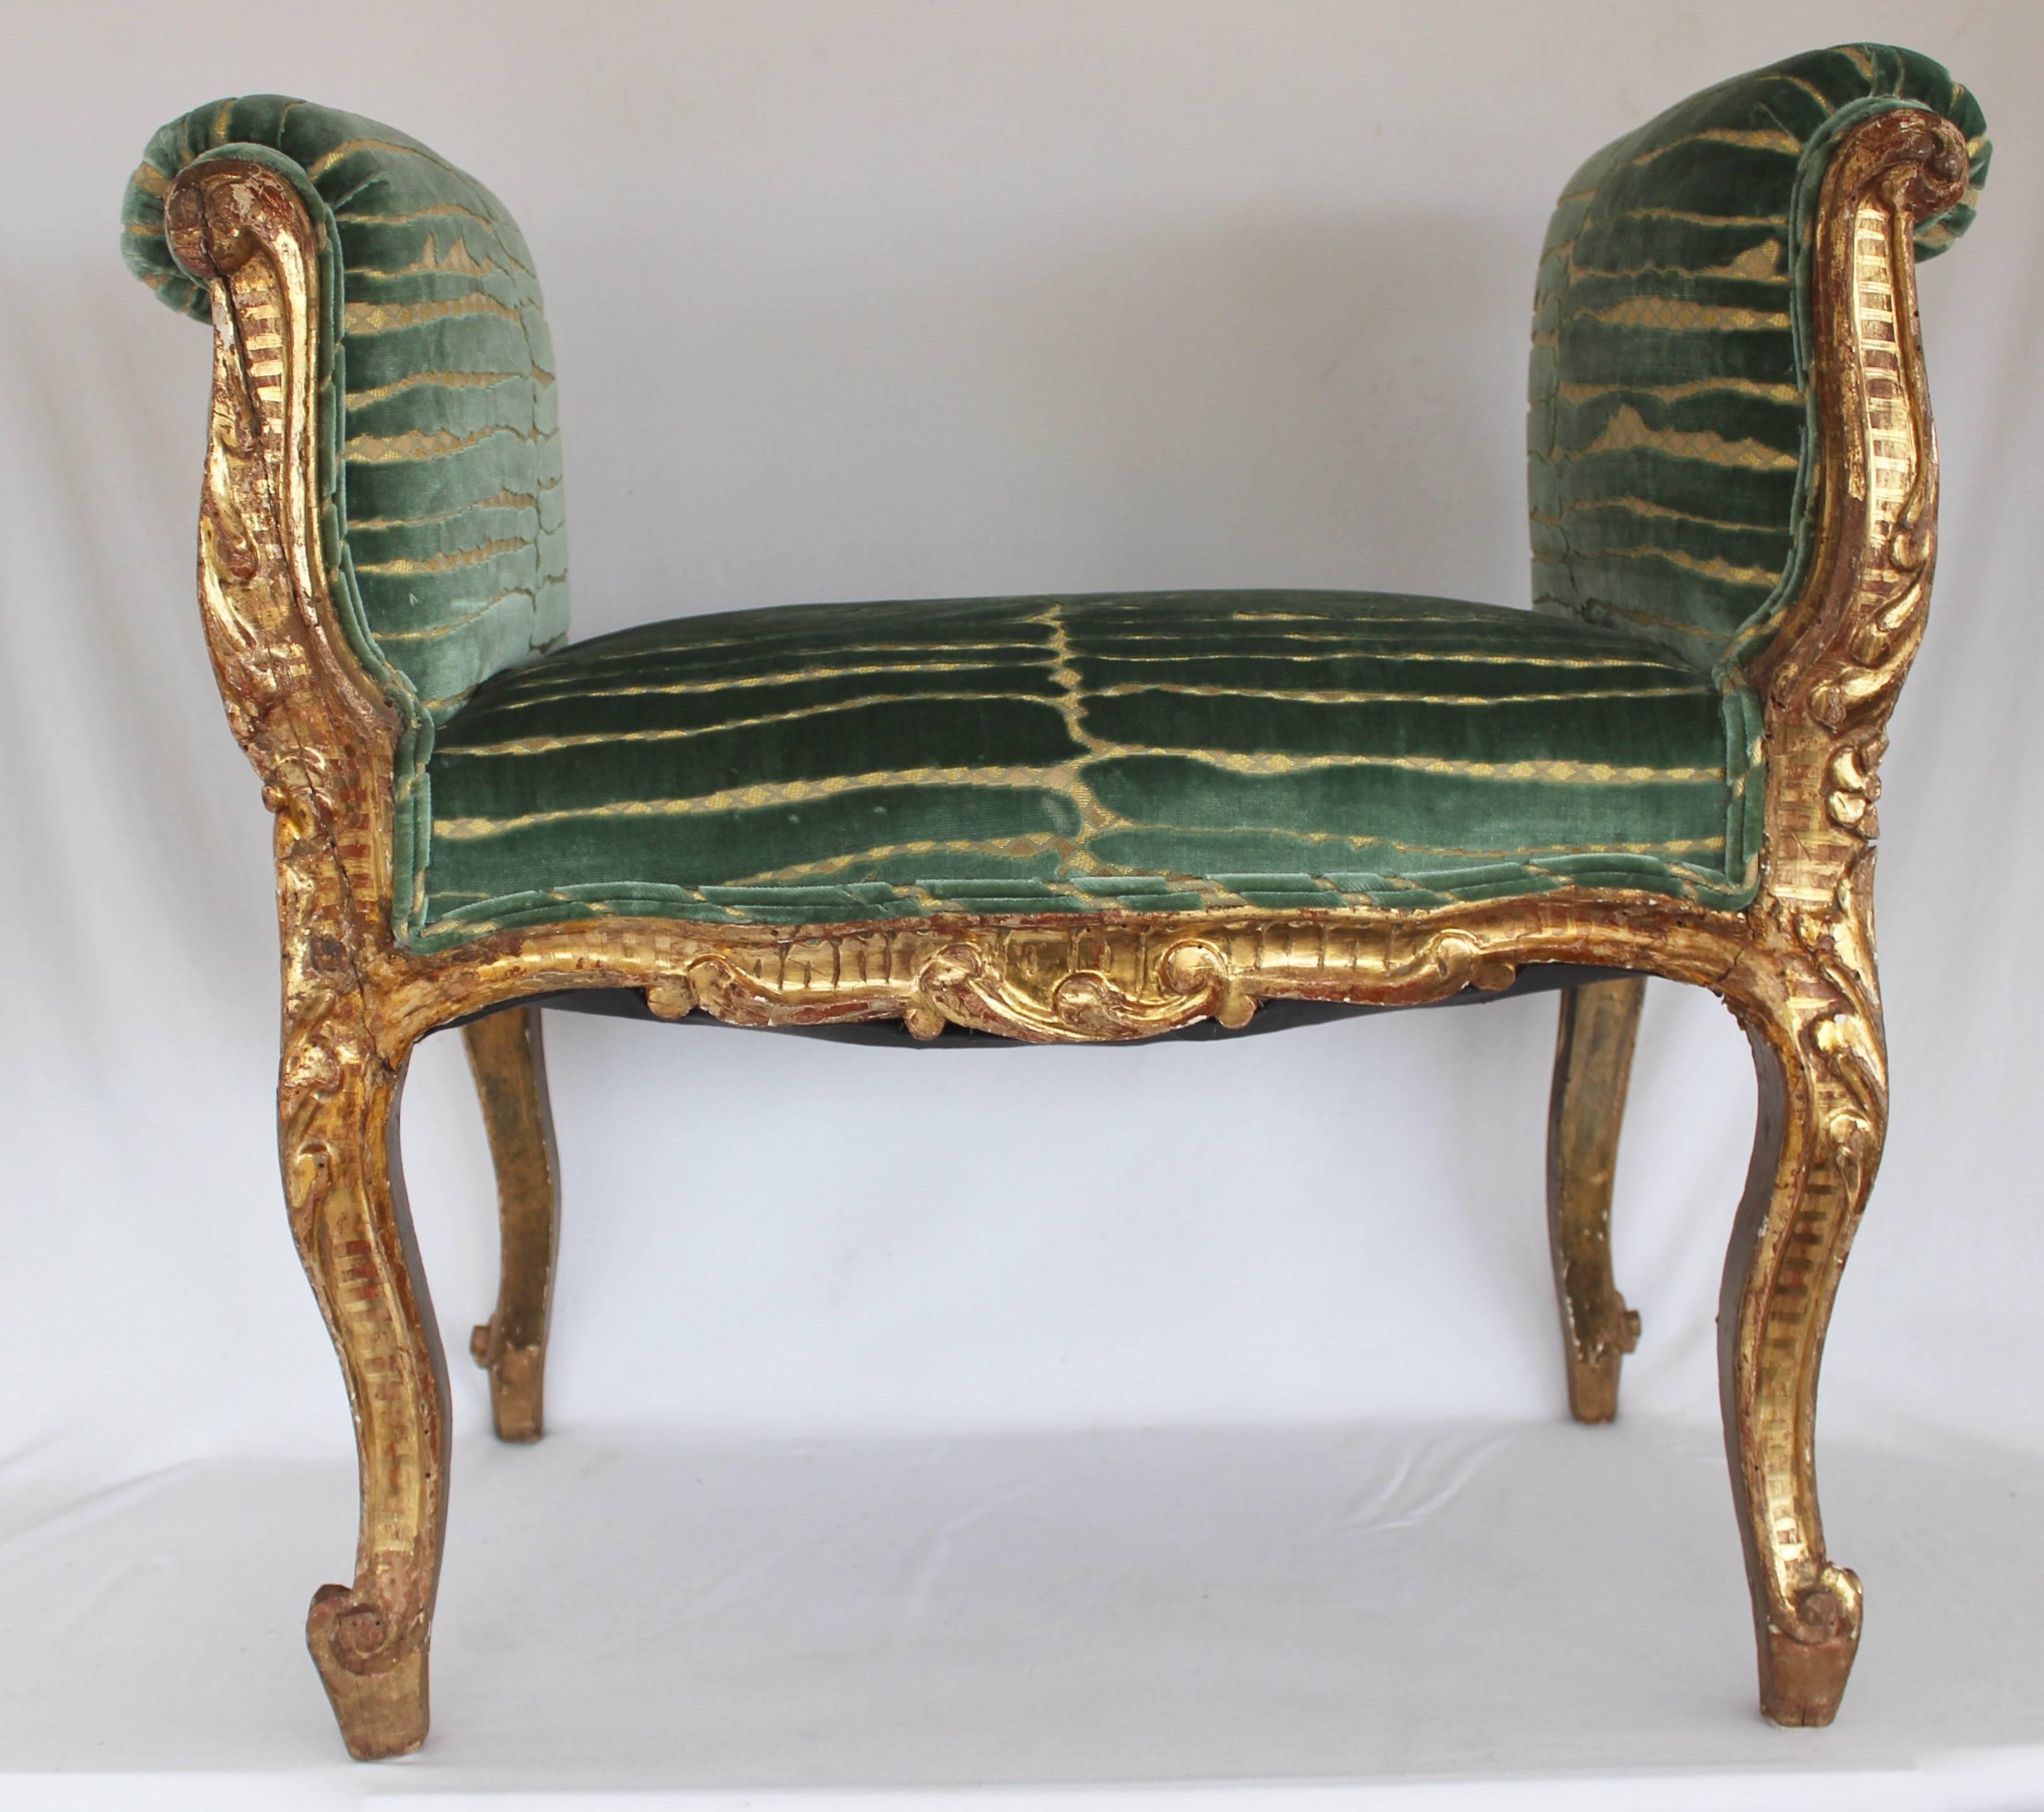 Fabulous 19th Century Italian gilt-wood bench beautifully upholstered in cut velvet.

Seat Height 18